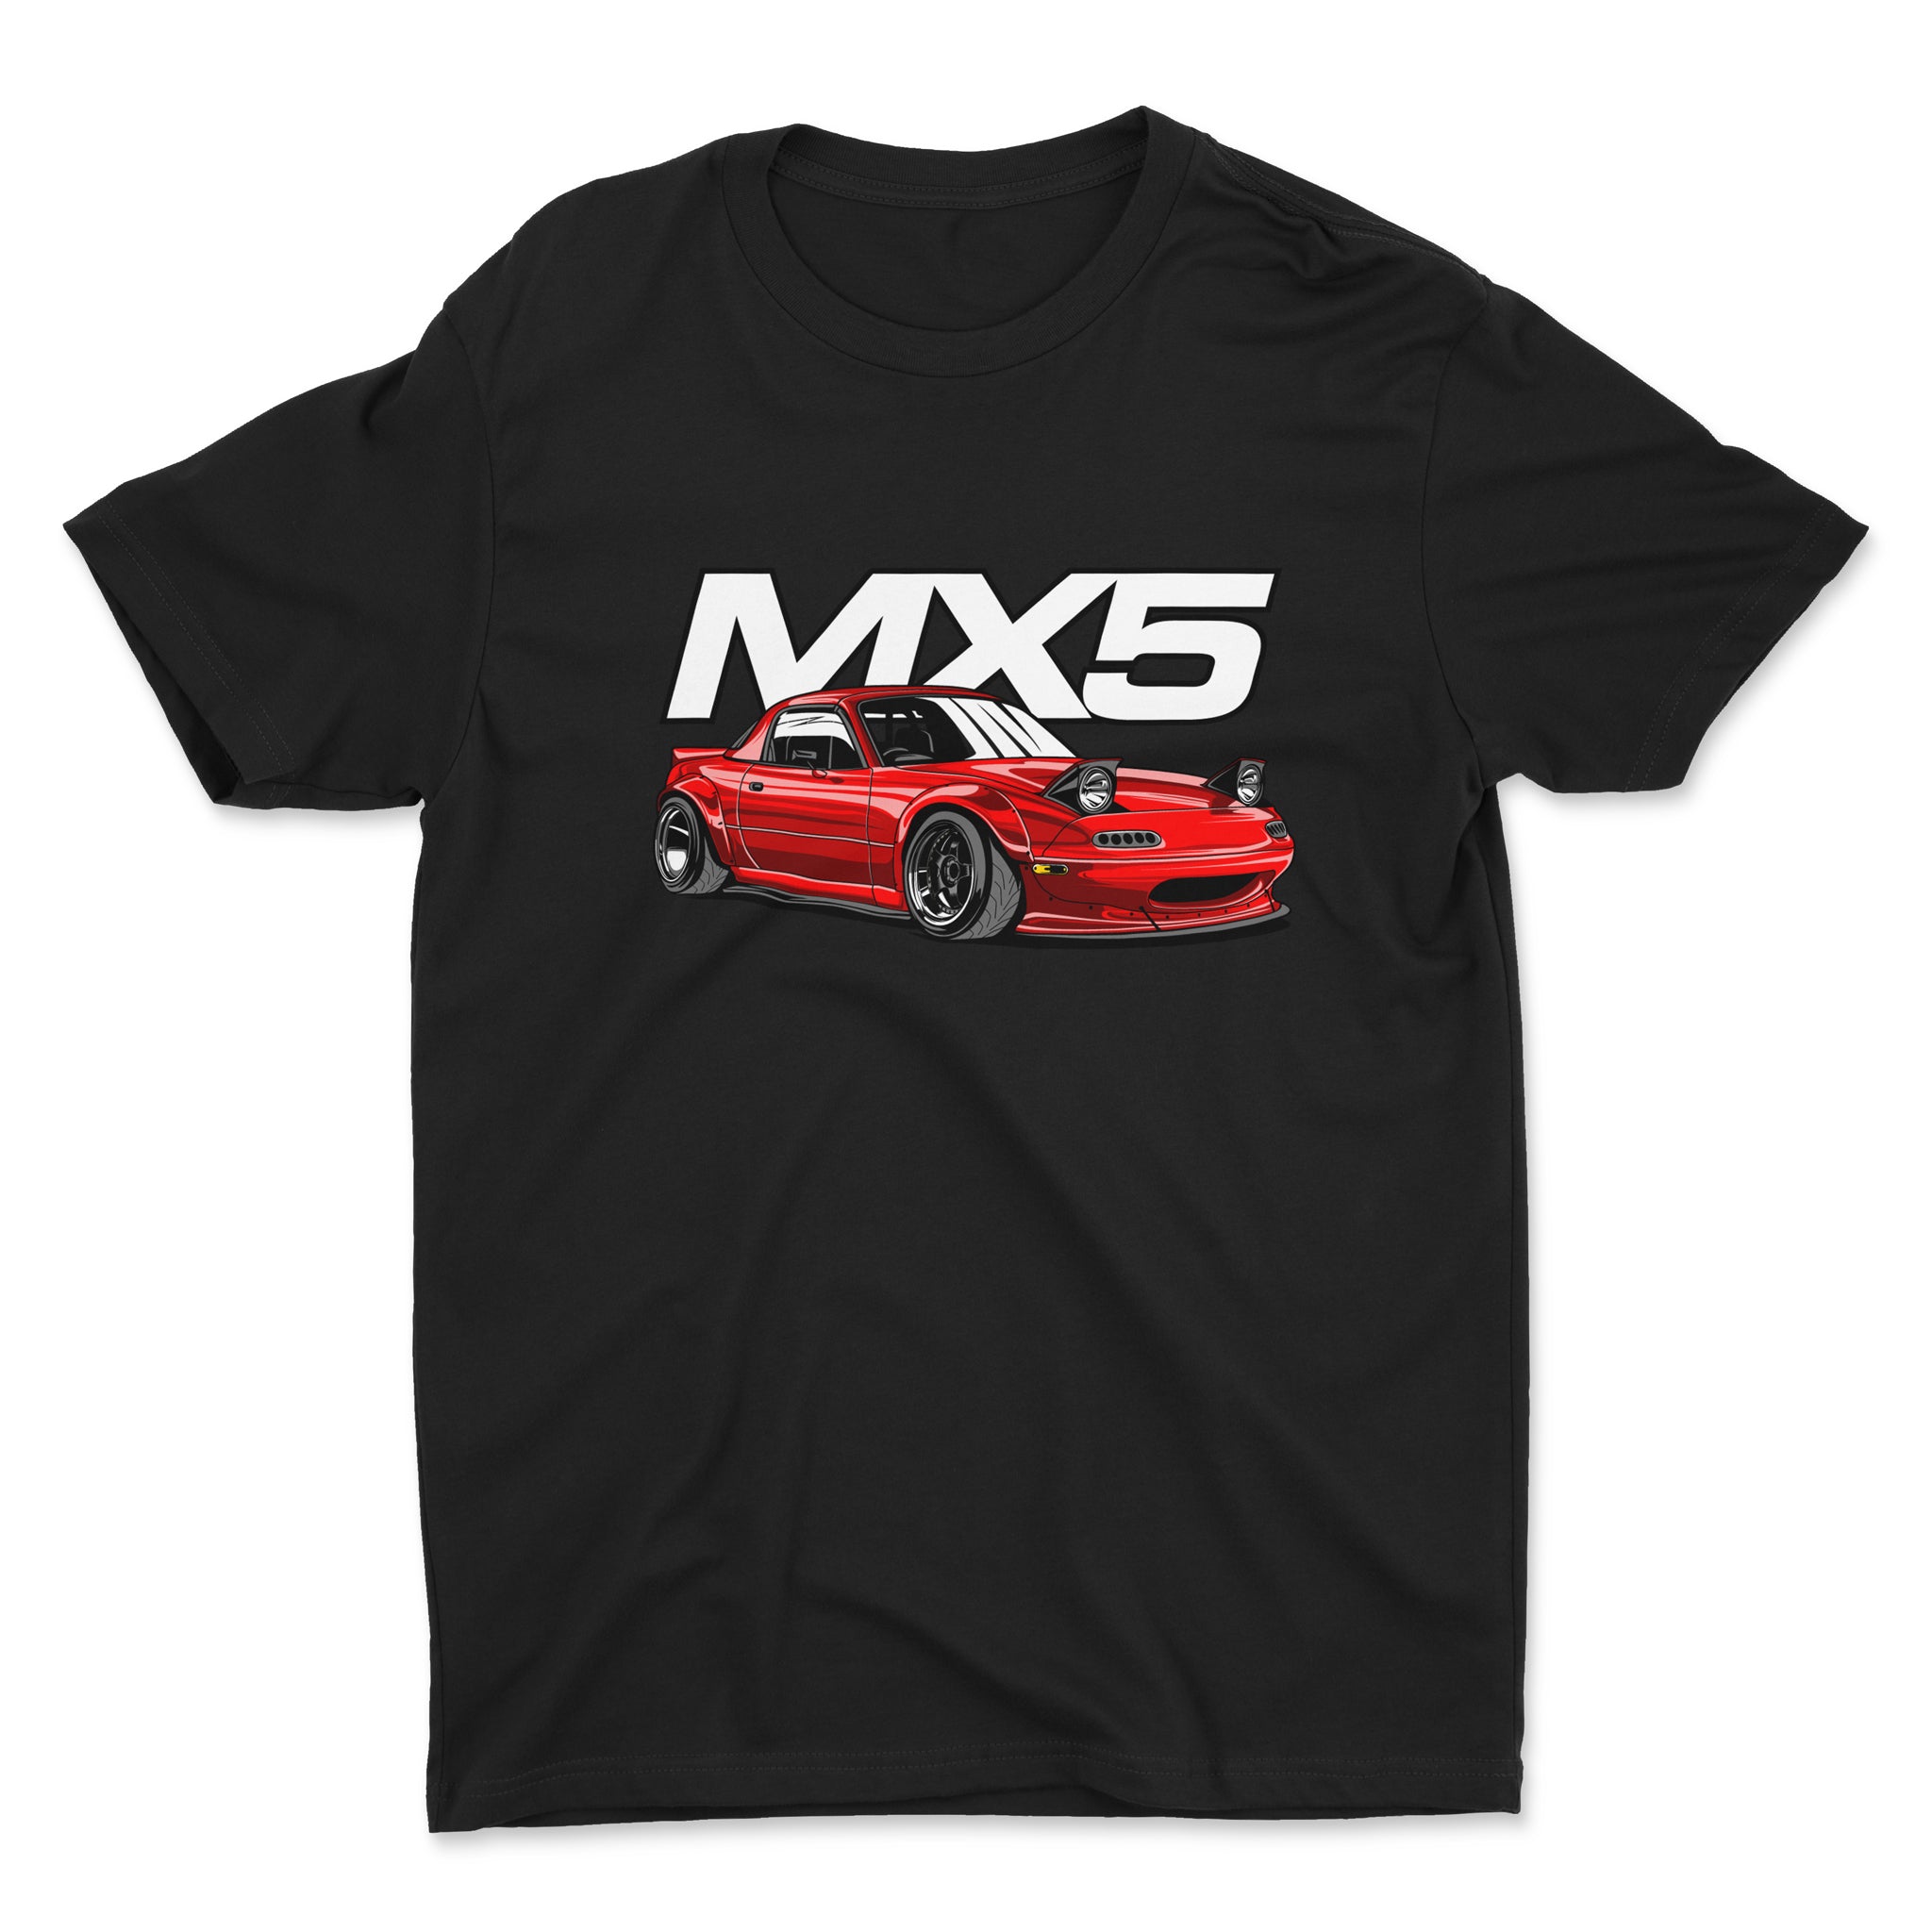 Mazda MX-5 Miata - Car T-Shirt - Black